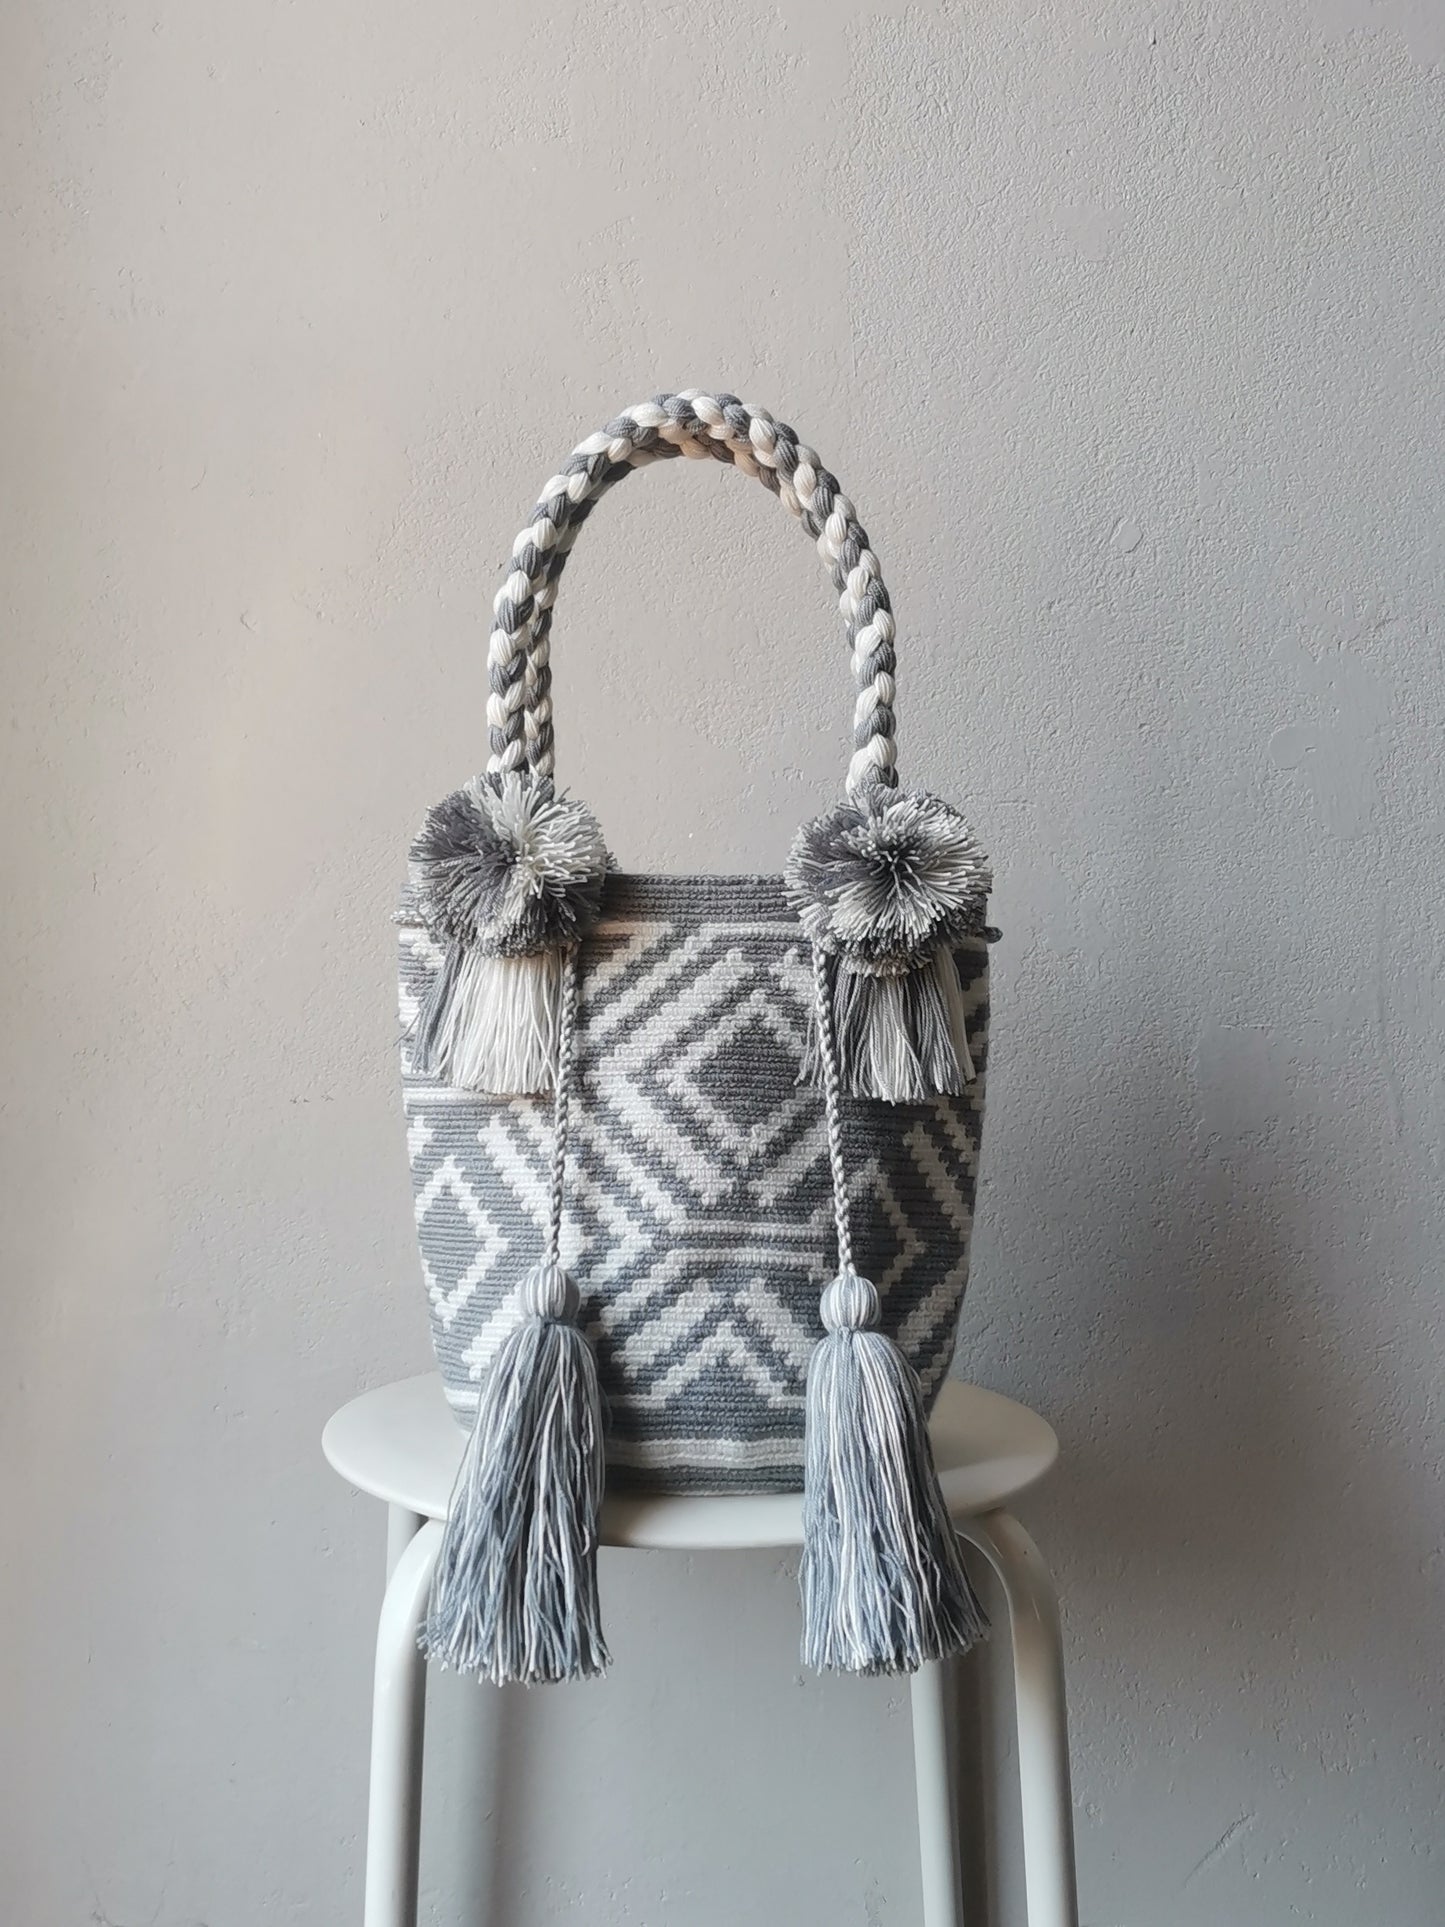 Gray and white M mochila handbag